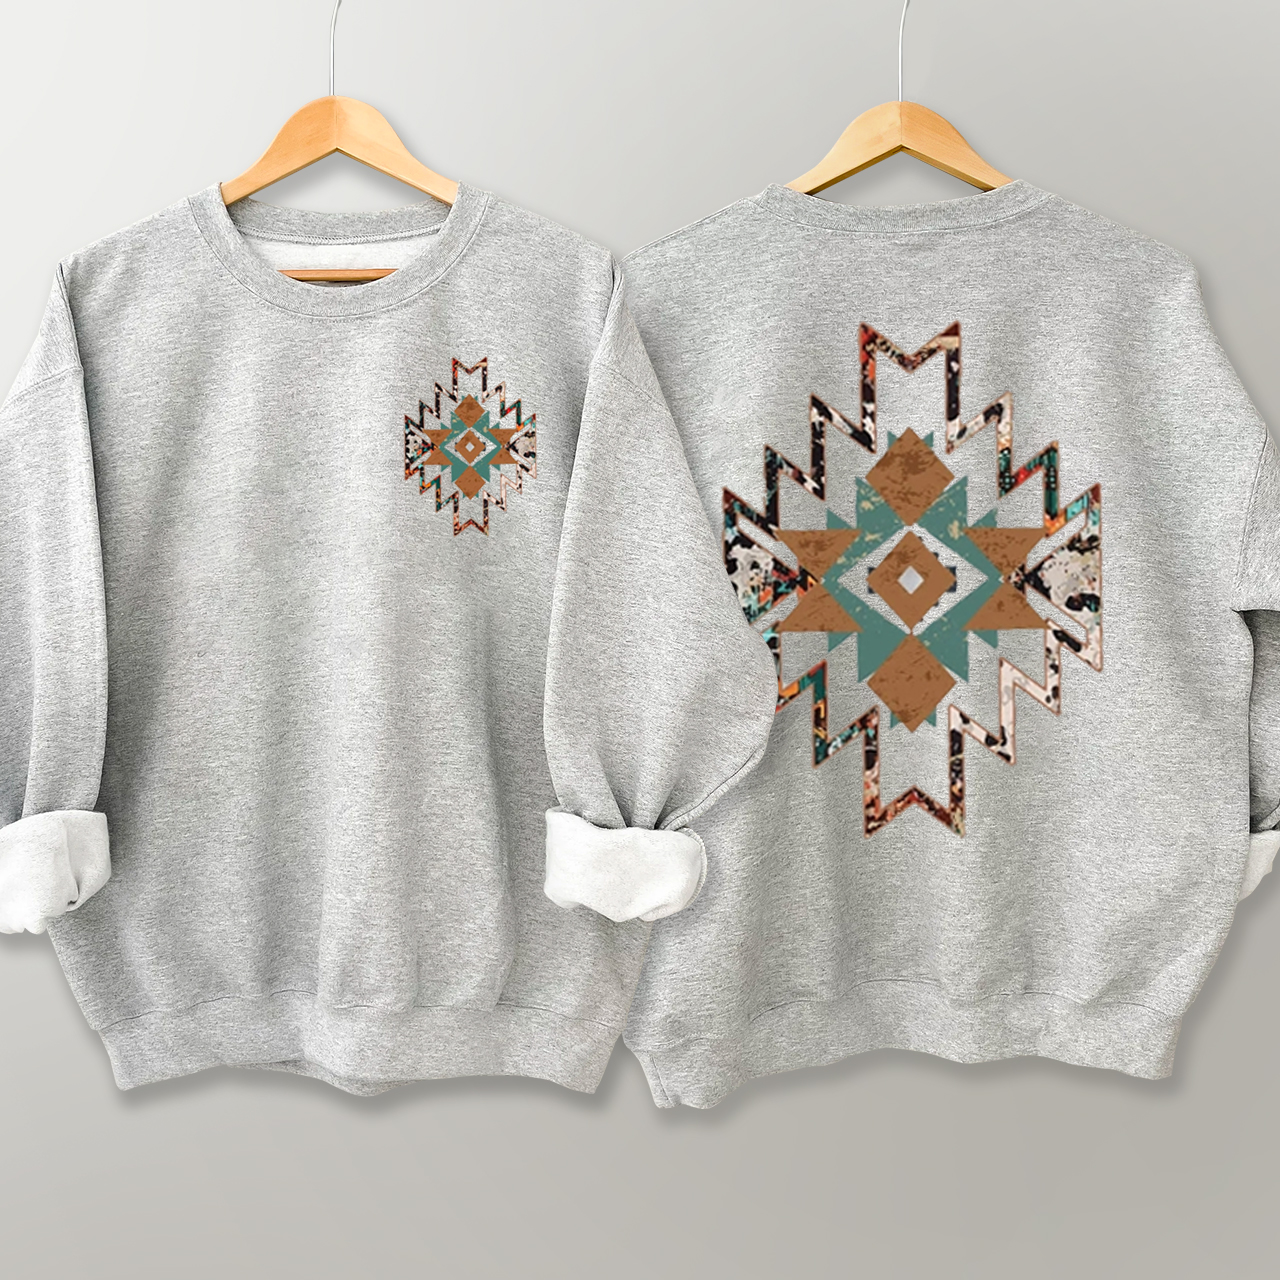 Cowboy Aztec Double sided printing Sweatshirt